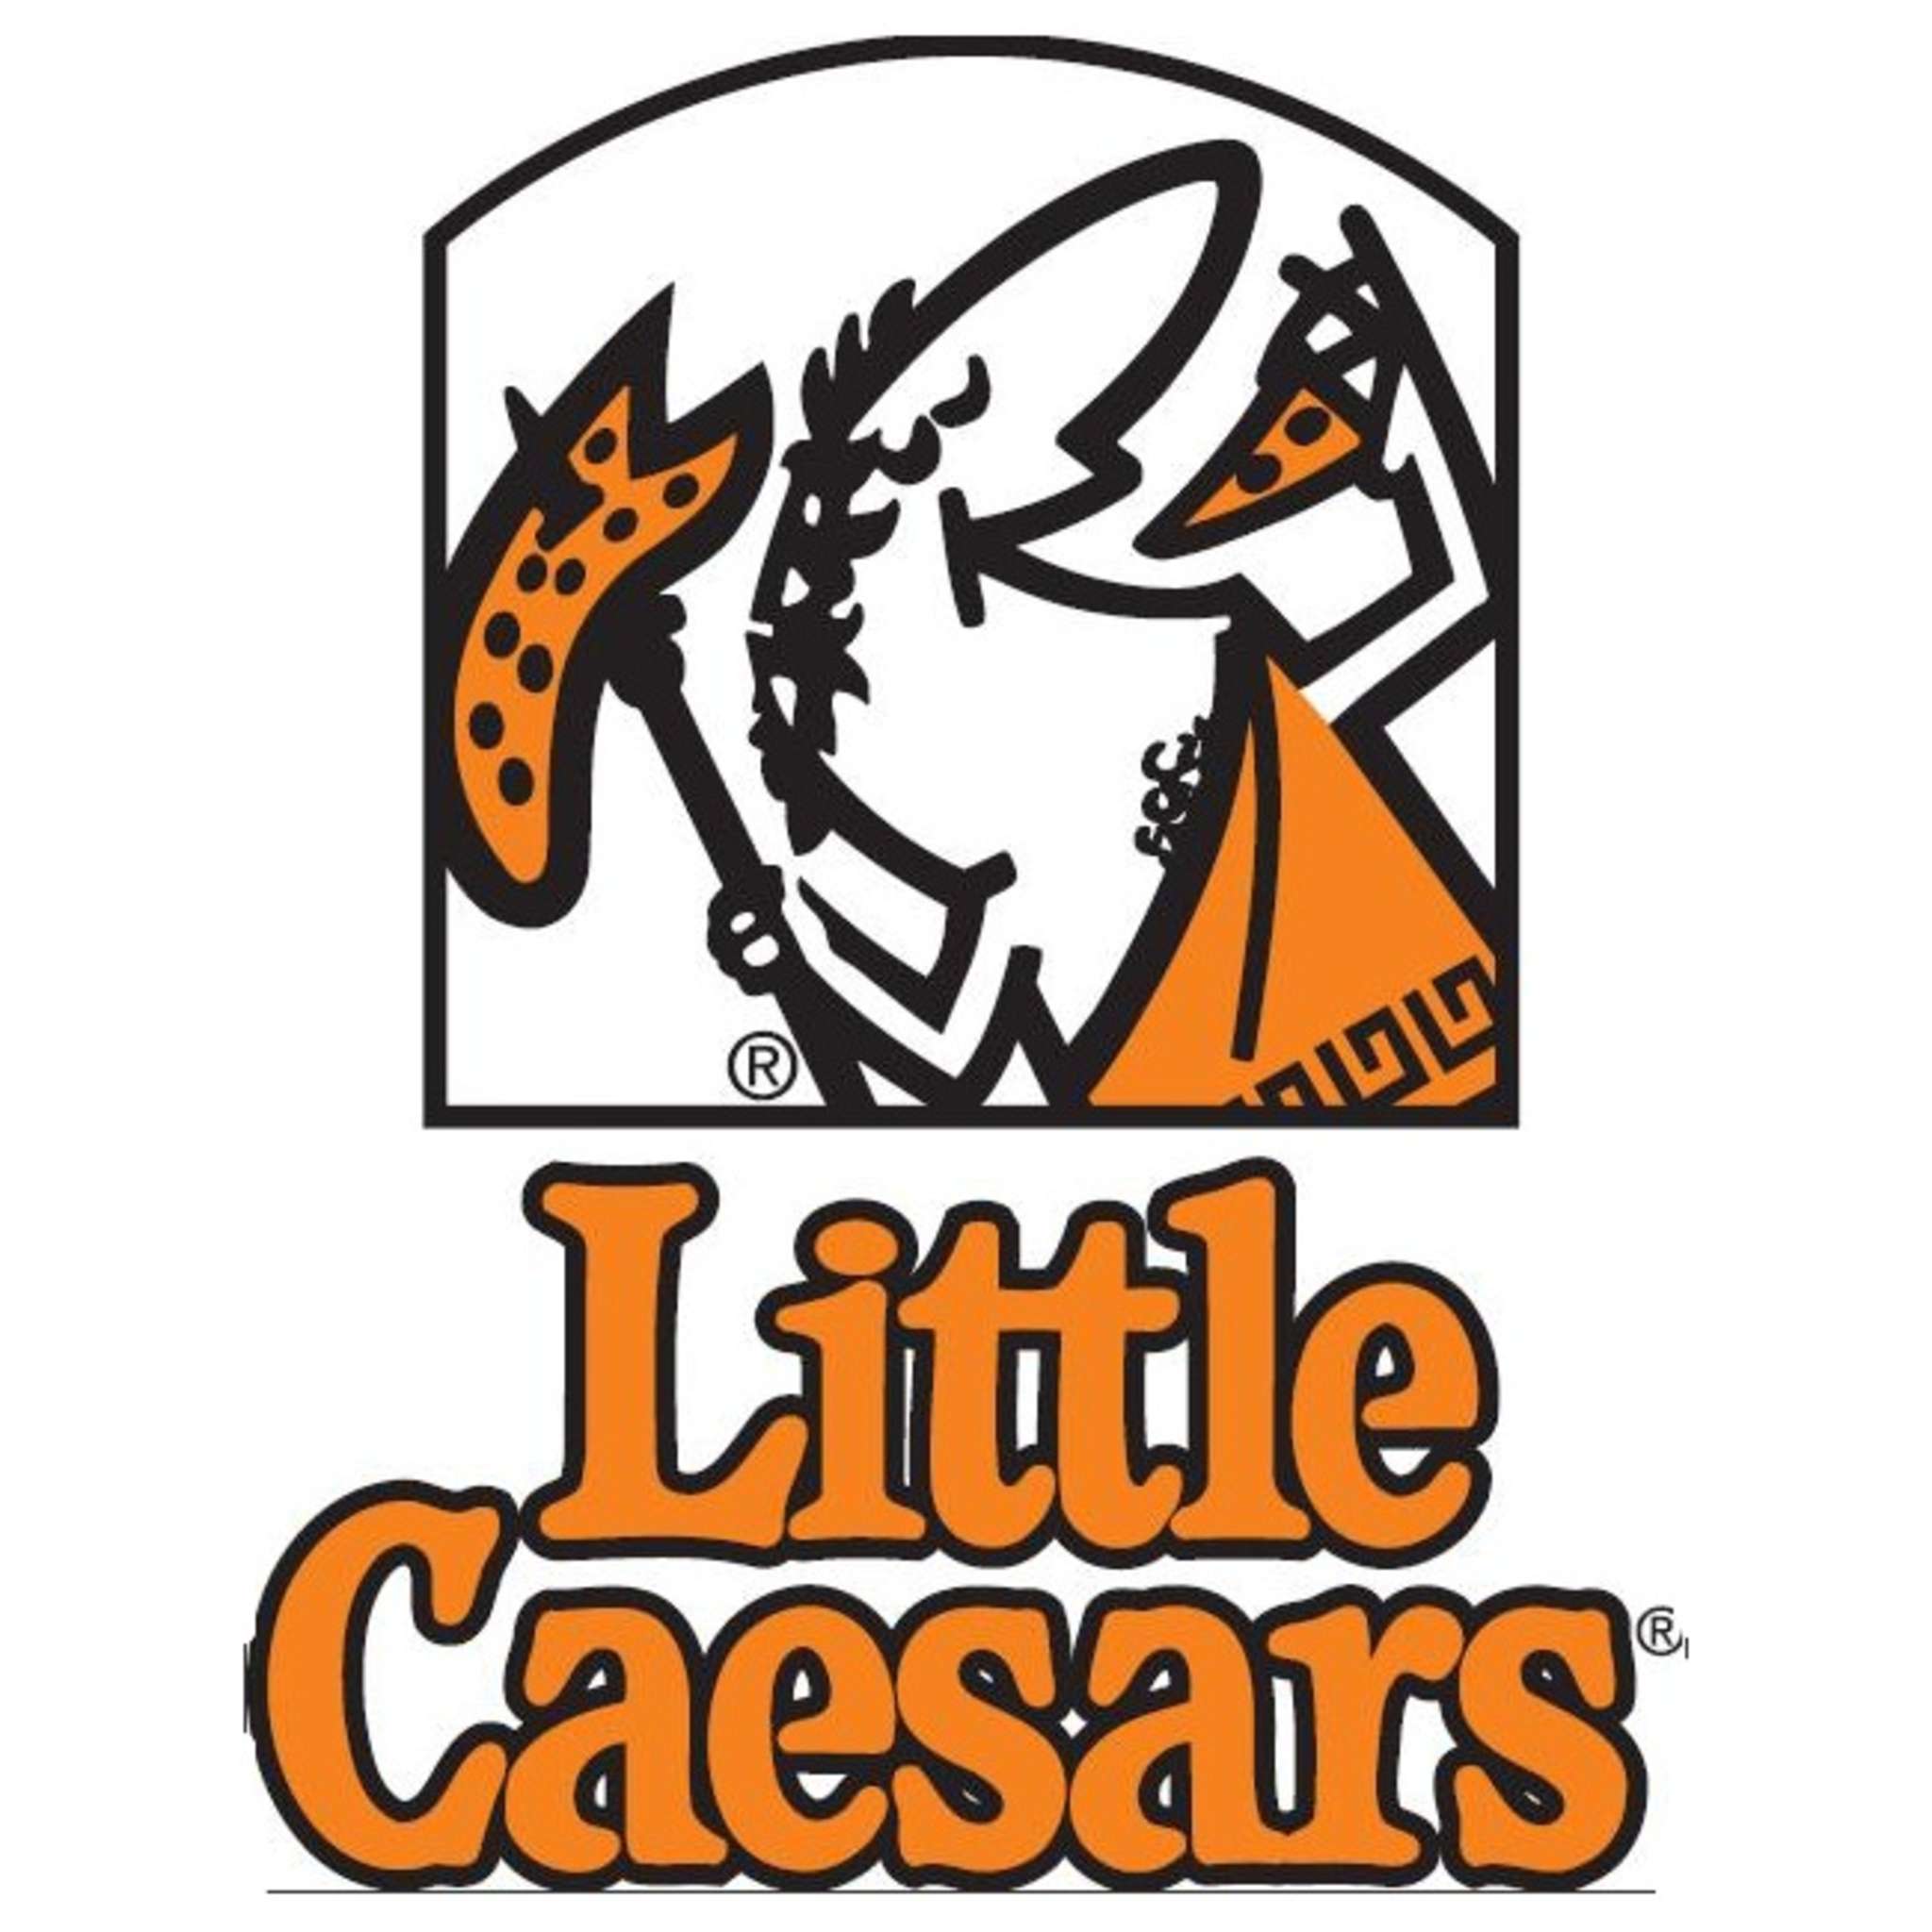 little caesars logo png